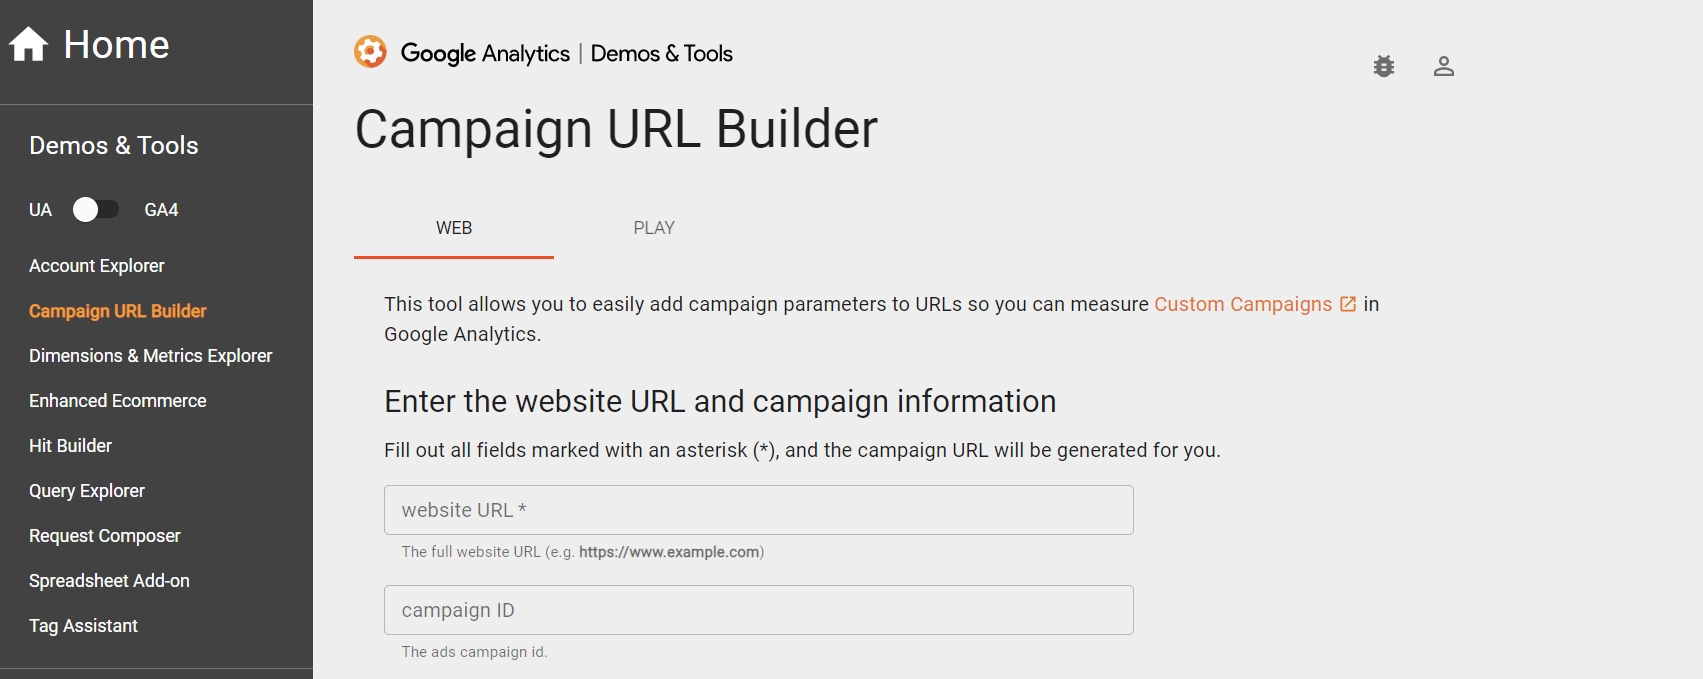 Google’s Campaign URL Builder